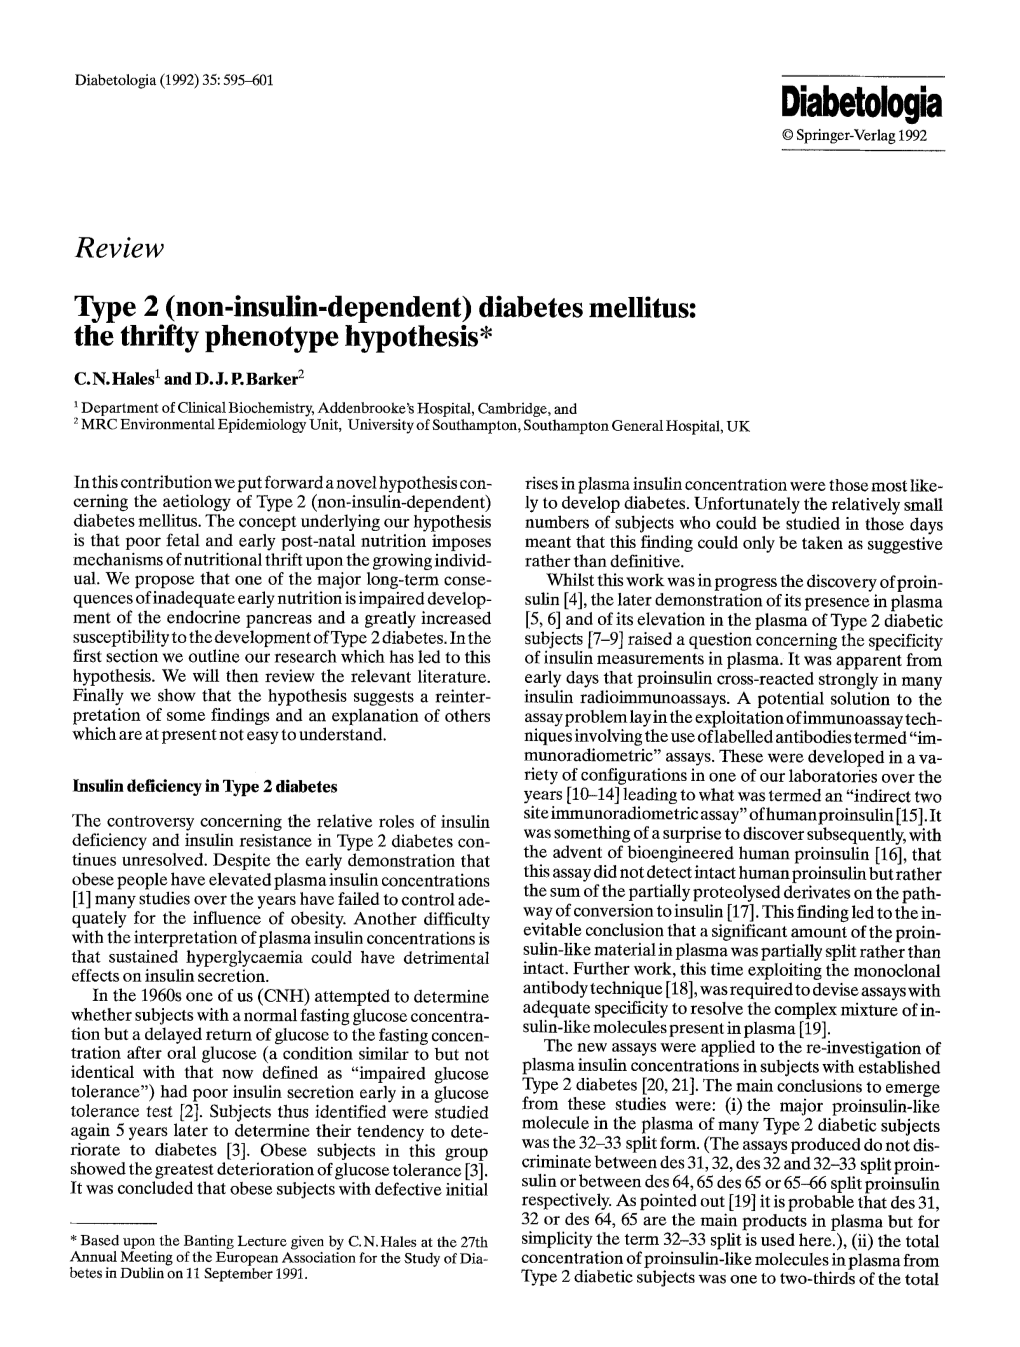 Type 2 (Non-Insulin-Dependent) Diabetes Mellitus: the Thrifty Phenotype Hypothesis*